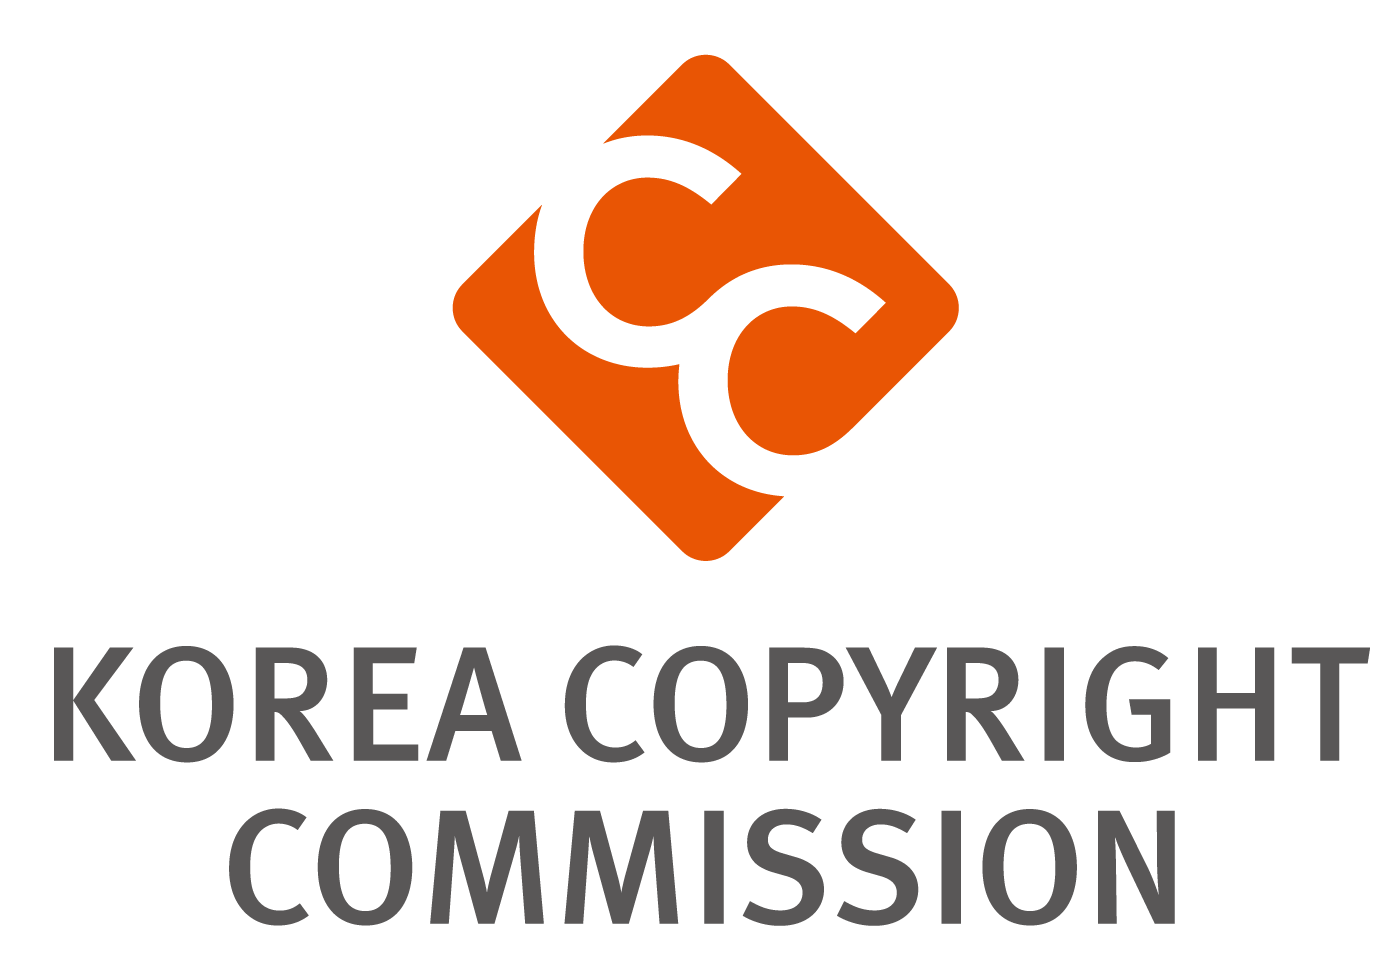 KOREA COPYRIGHT COMMISSION